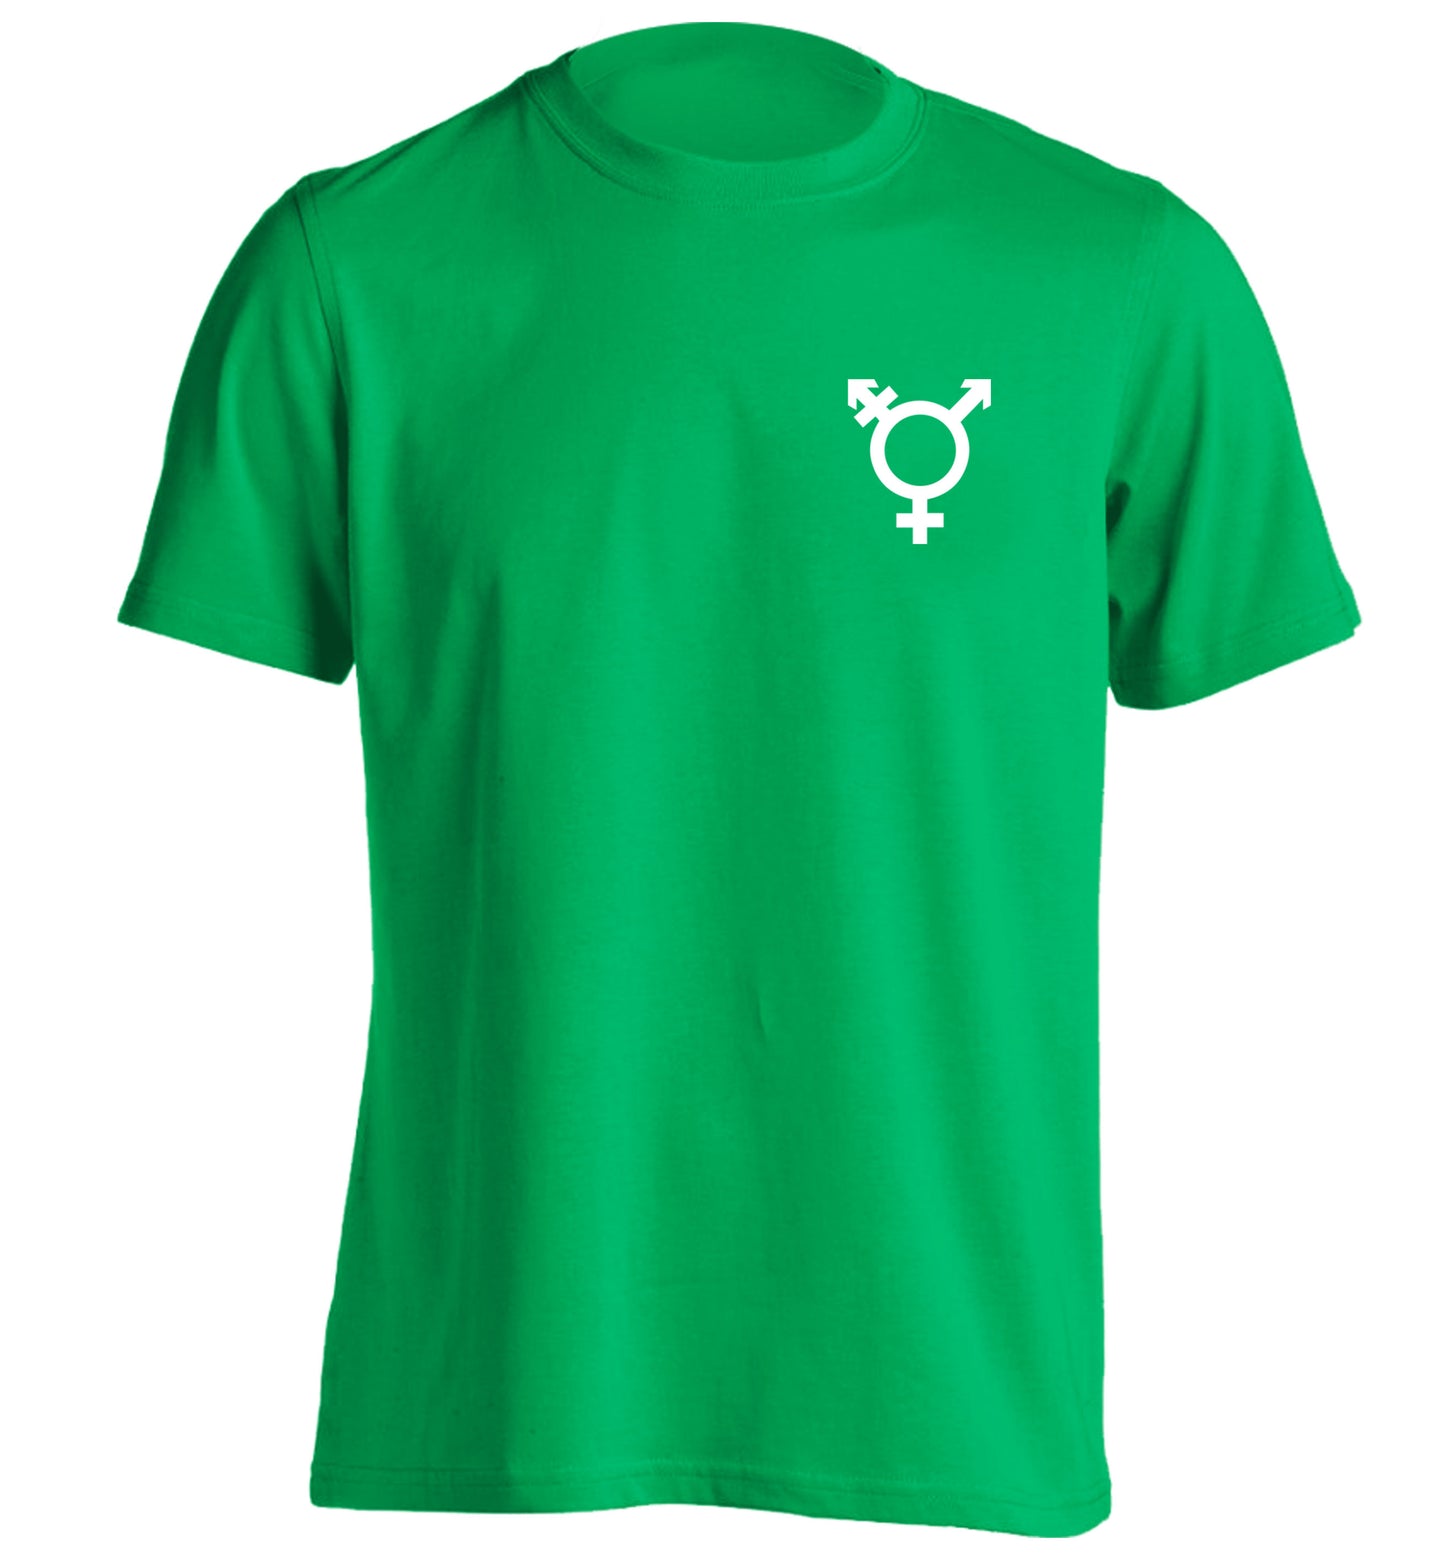 Trans gender symbol pocket adults unisex green Tshirt 2XL